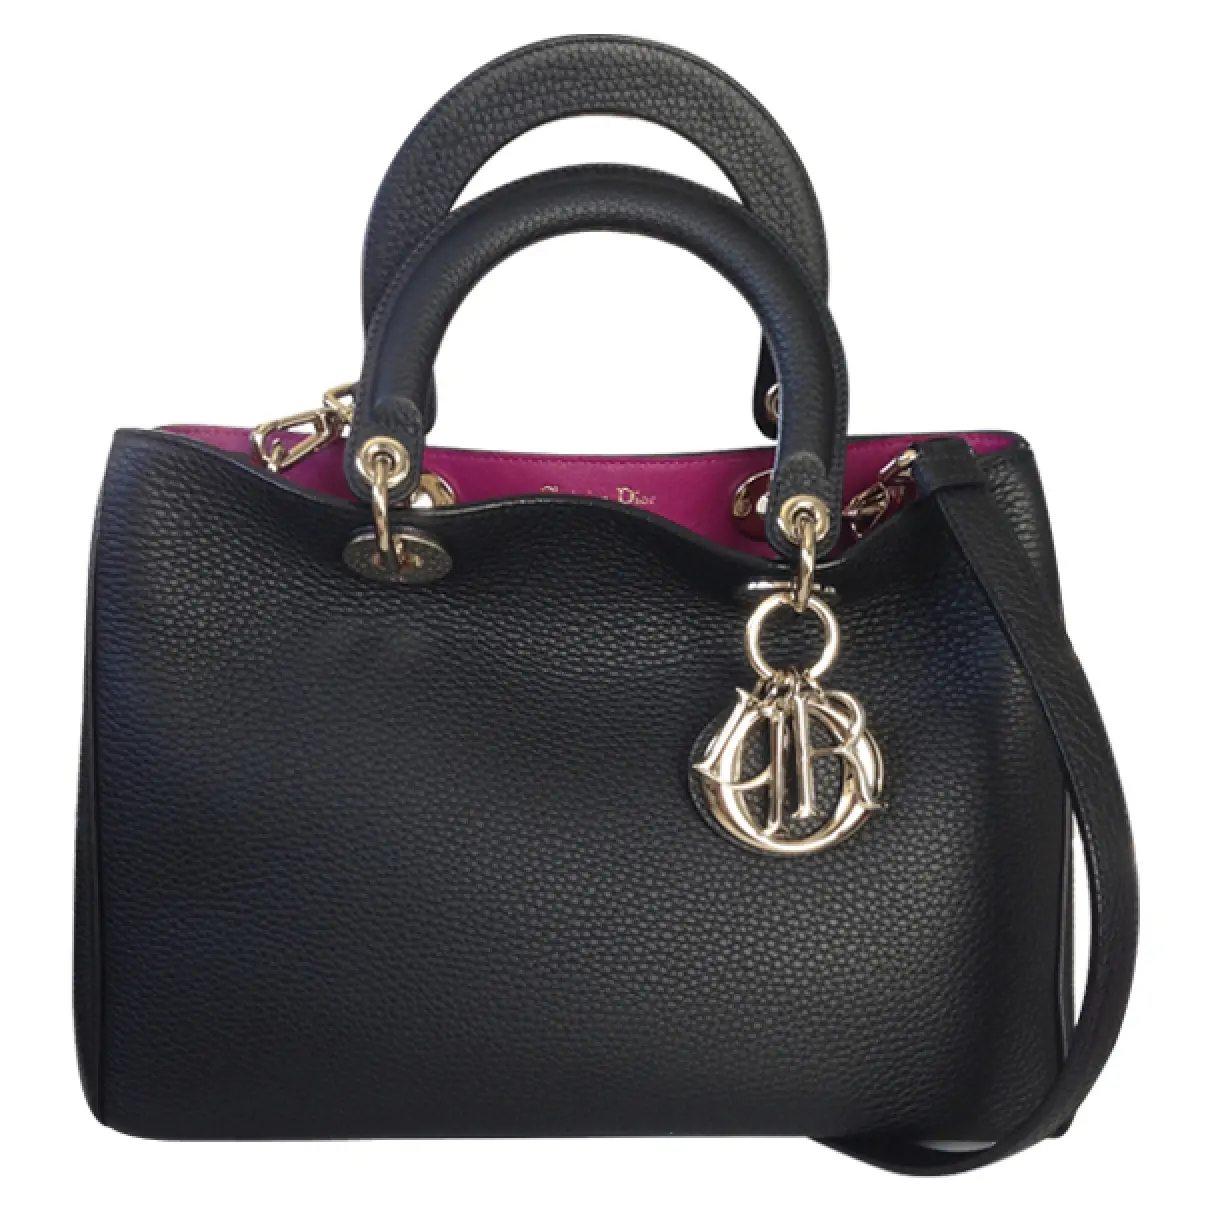 Black Leather Handbag Diorissimo Dior